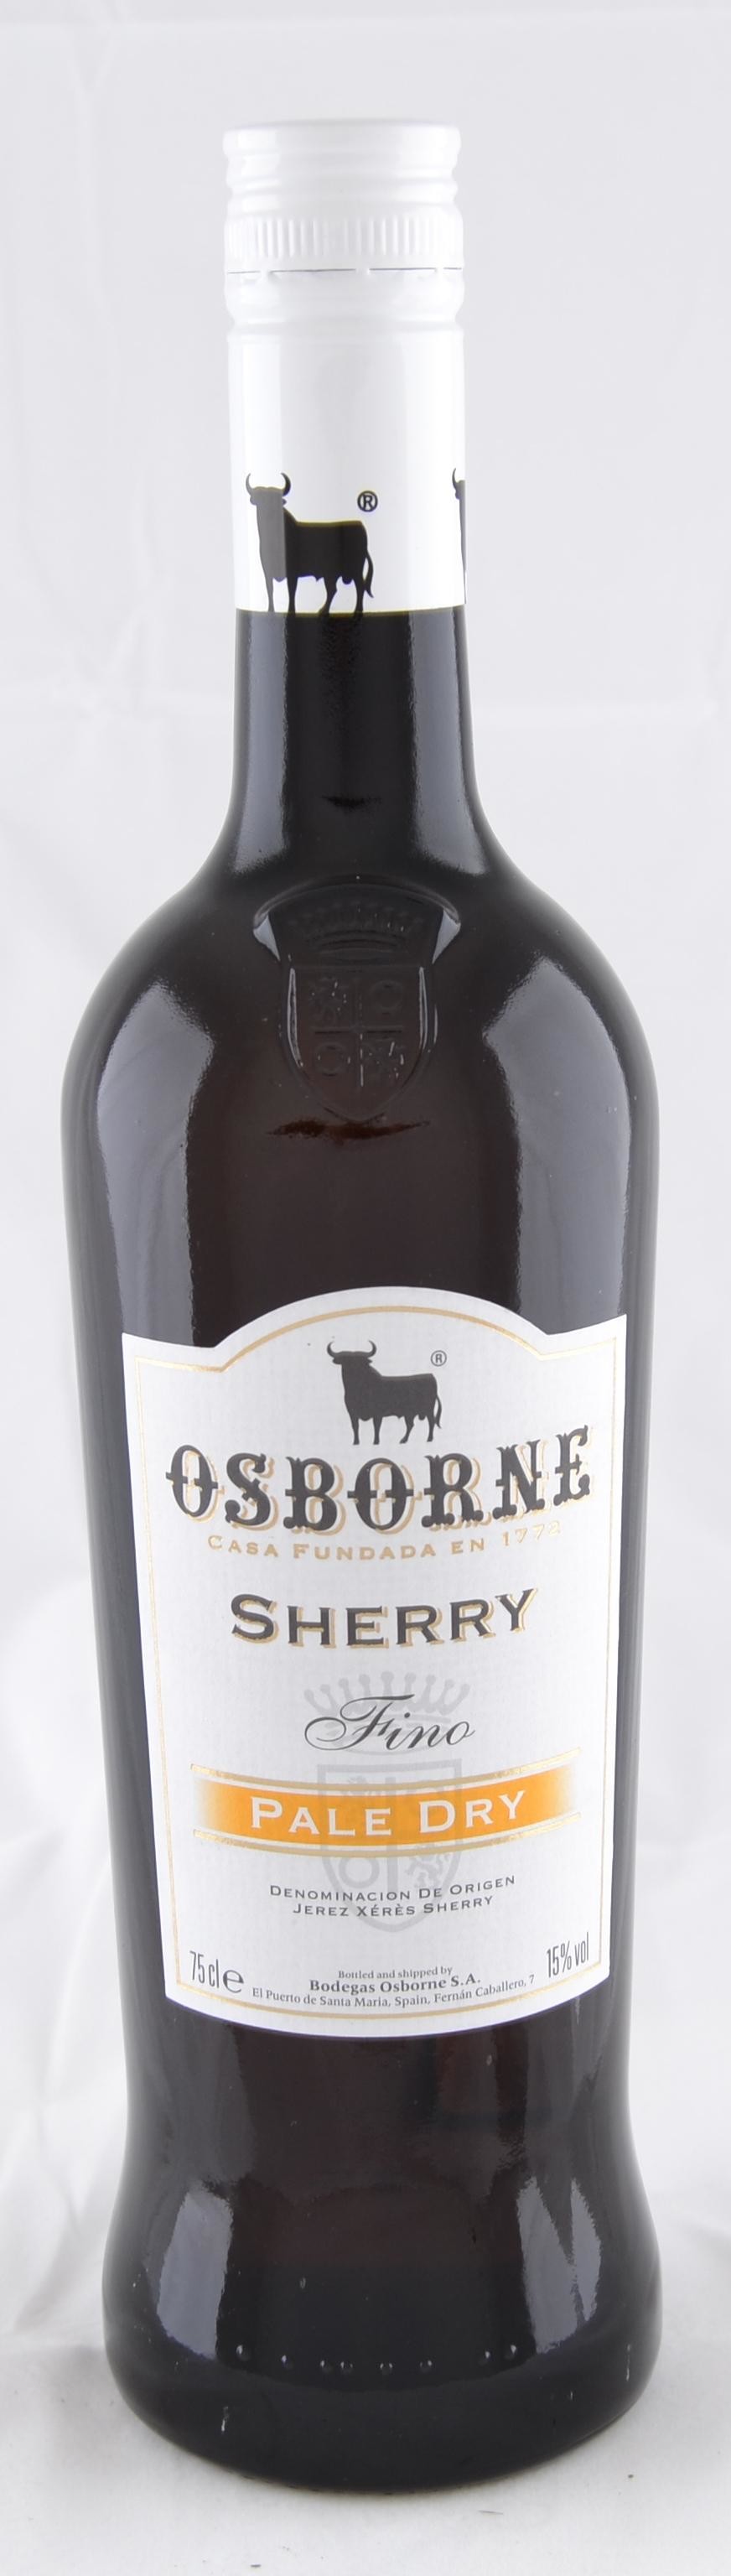 Sherry osborne pale dry fino 75cl 15%